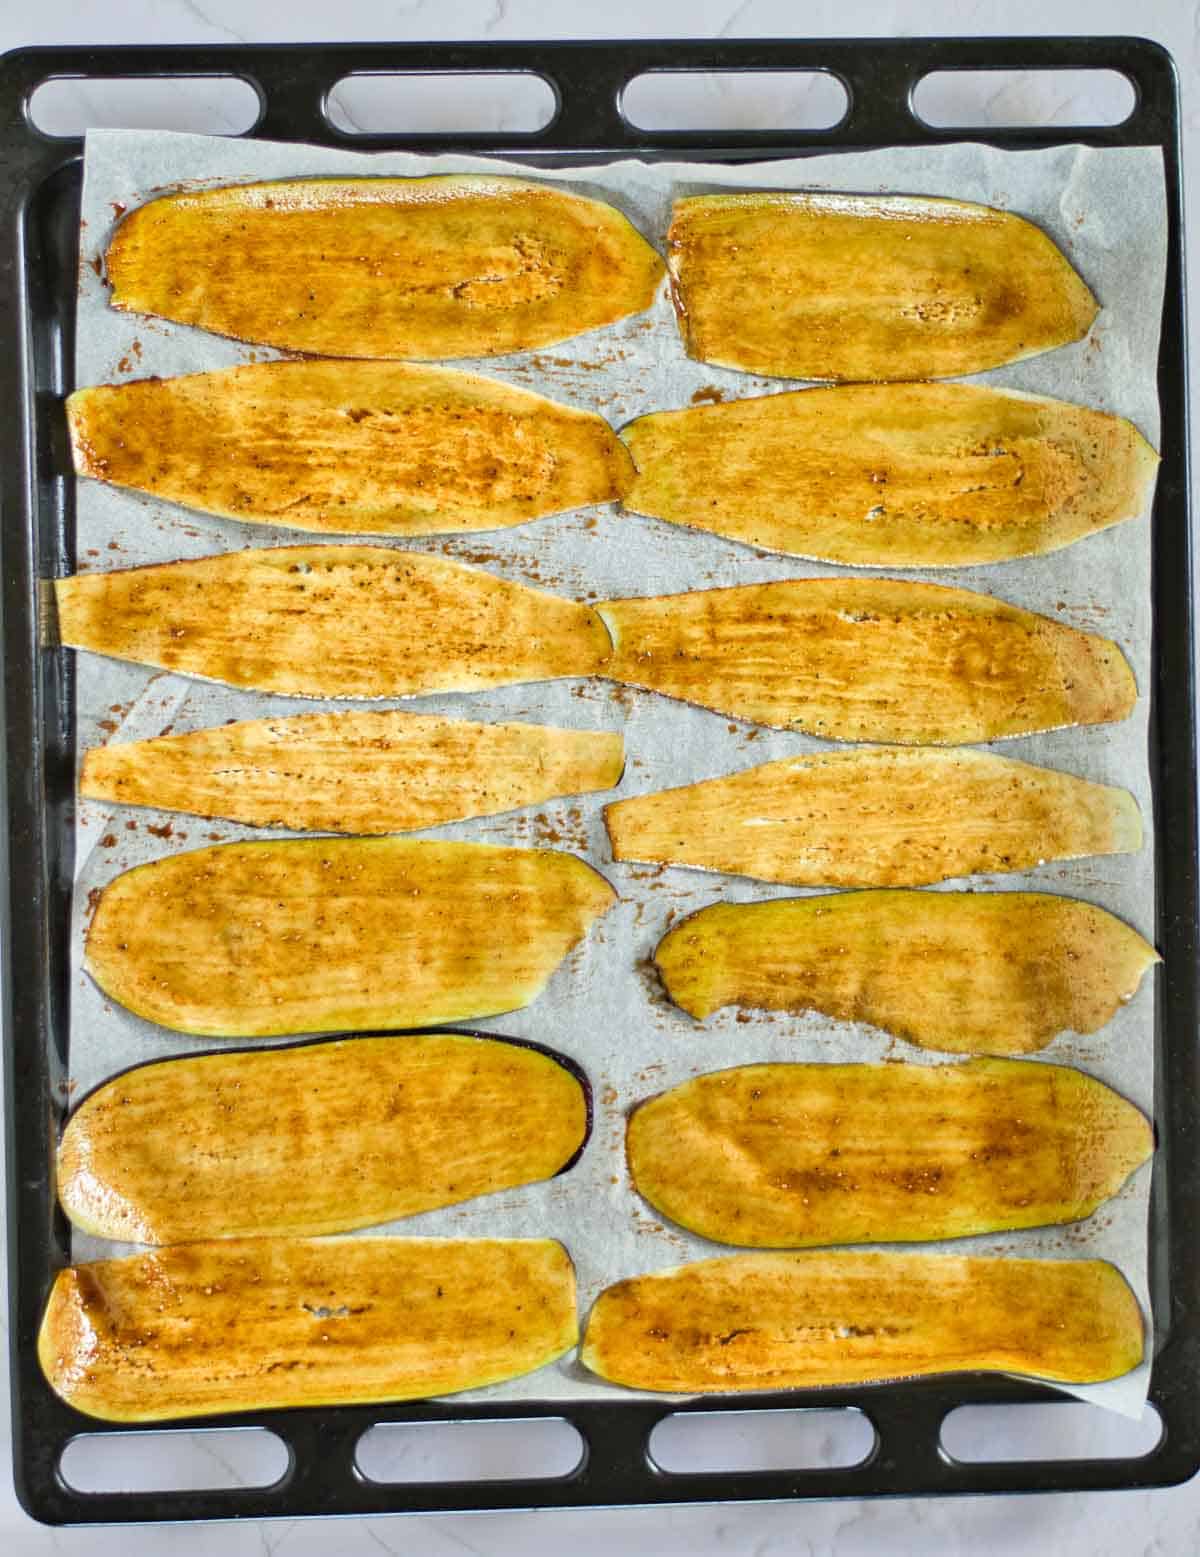 Eggplant slices brushed with seasonings